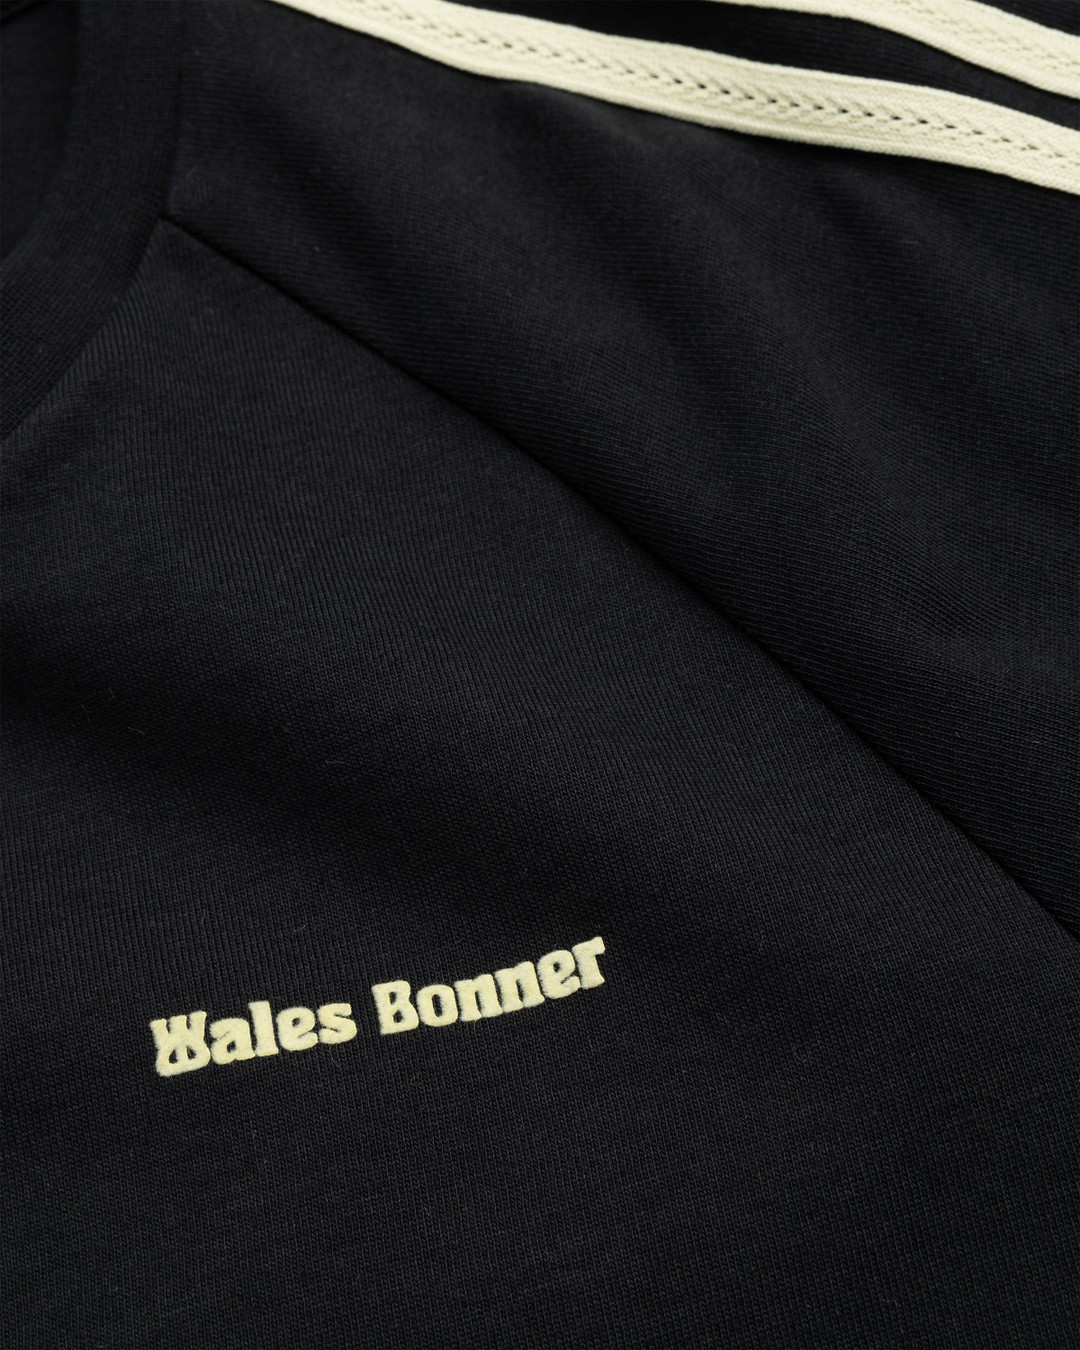 Adidas x Wales Bonner – Organic Cotton Tee Black - T-shirts - Black - Image 6